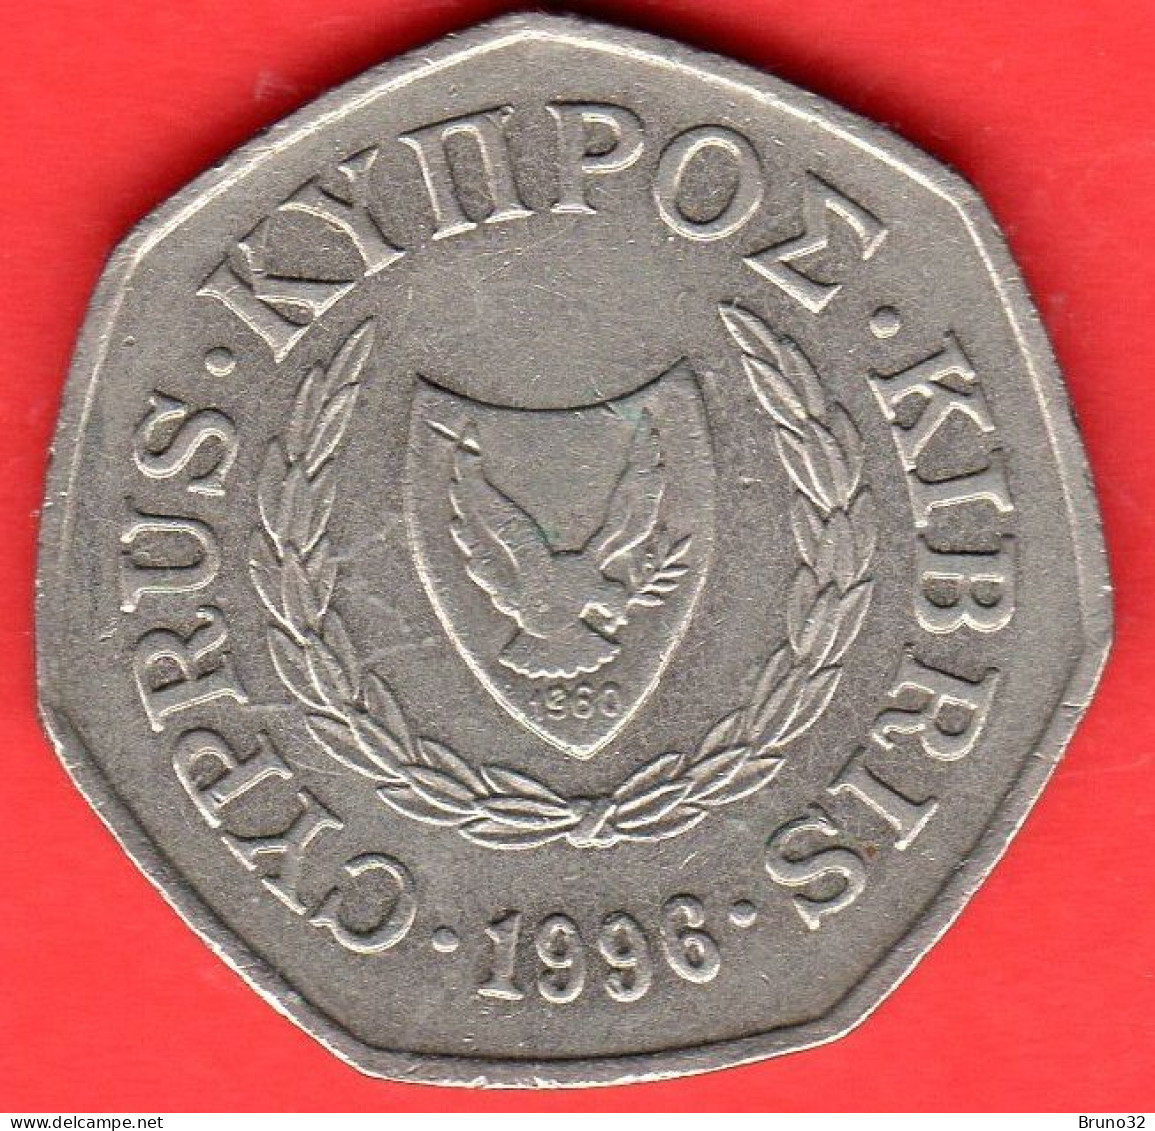 Cipro - Chyprus - Kıbrıs - Chypre - 1996 - 50 Cents - SPL/XF - Come Da Foto - Zypern